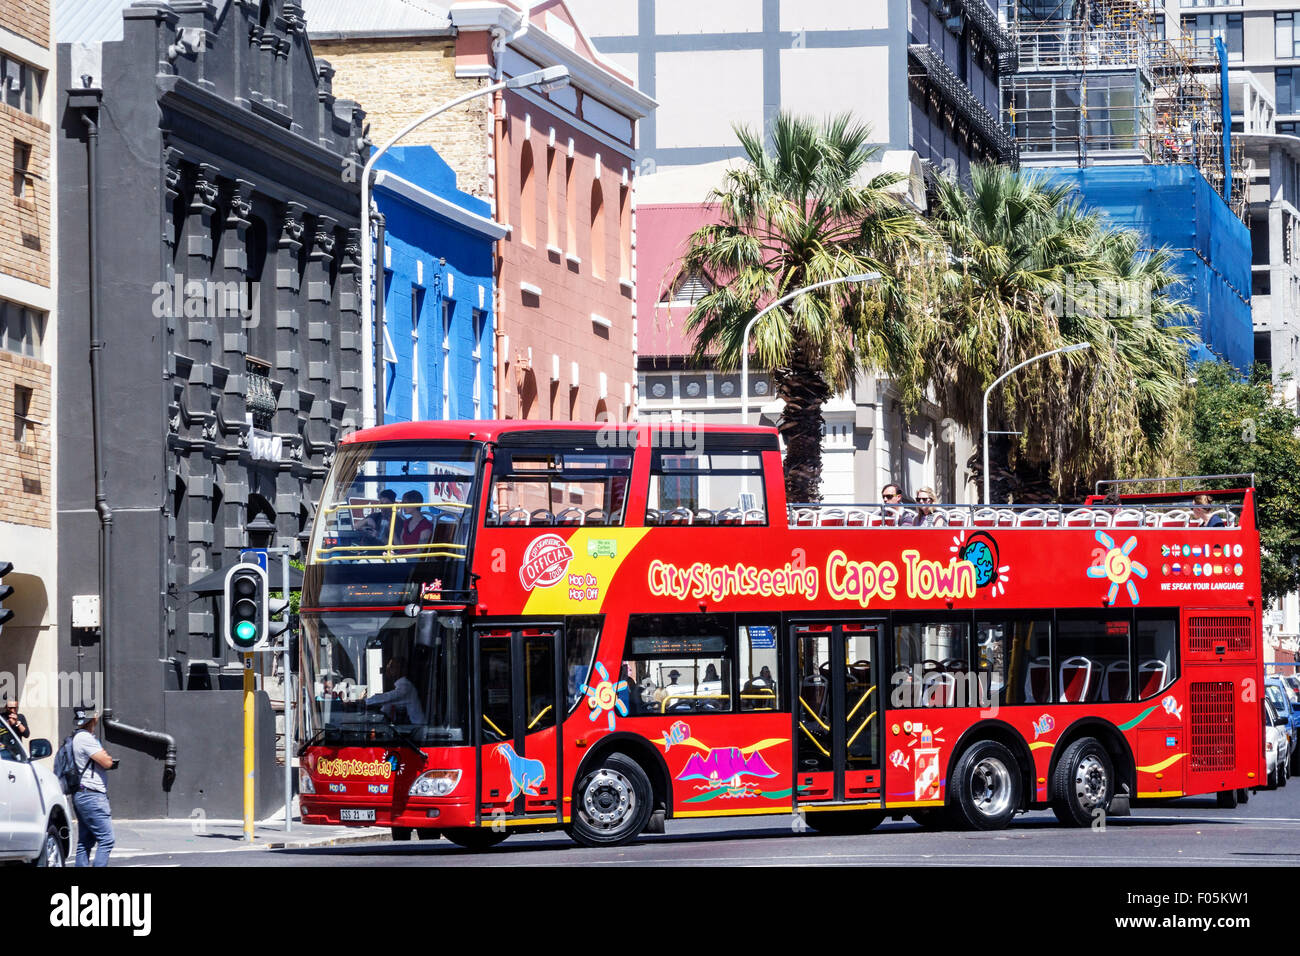 Cape Town South Africa,City Centre,center,Buitenkant Street,City,bus,coach,double decker,red,SAfri150310035 Stock Photo